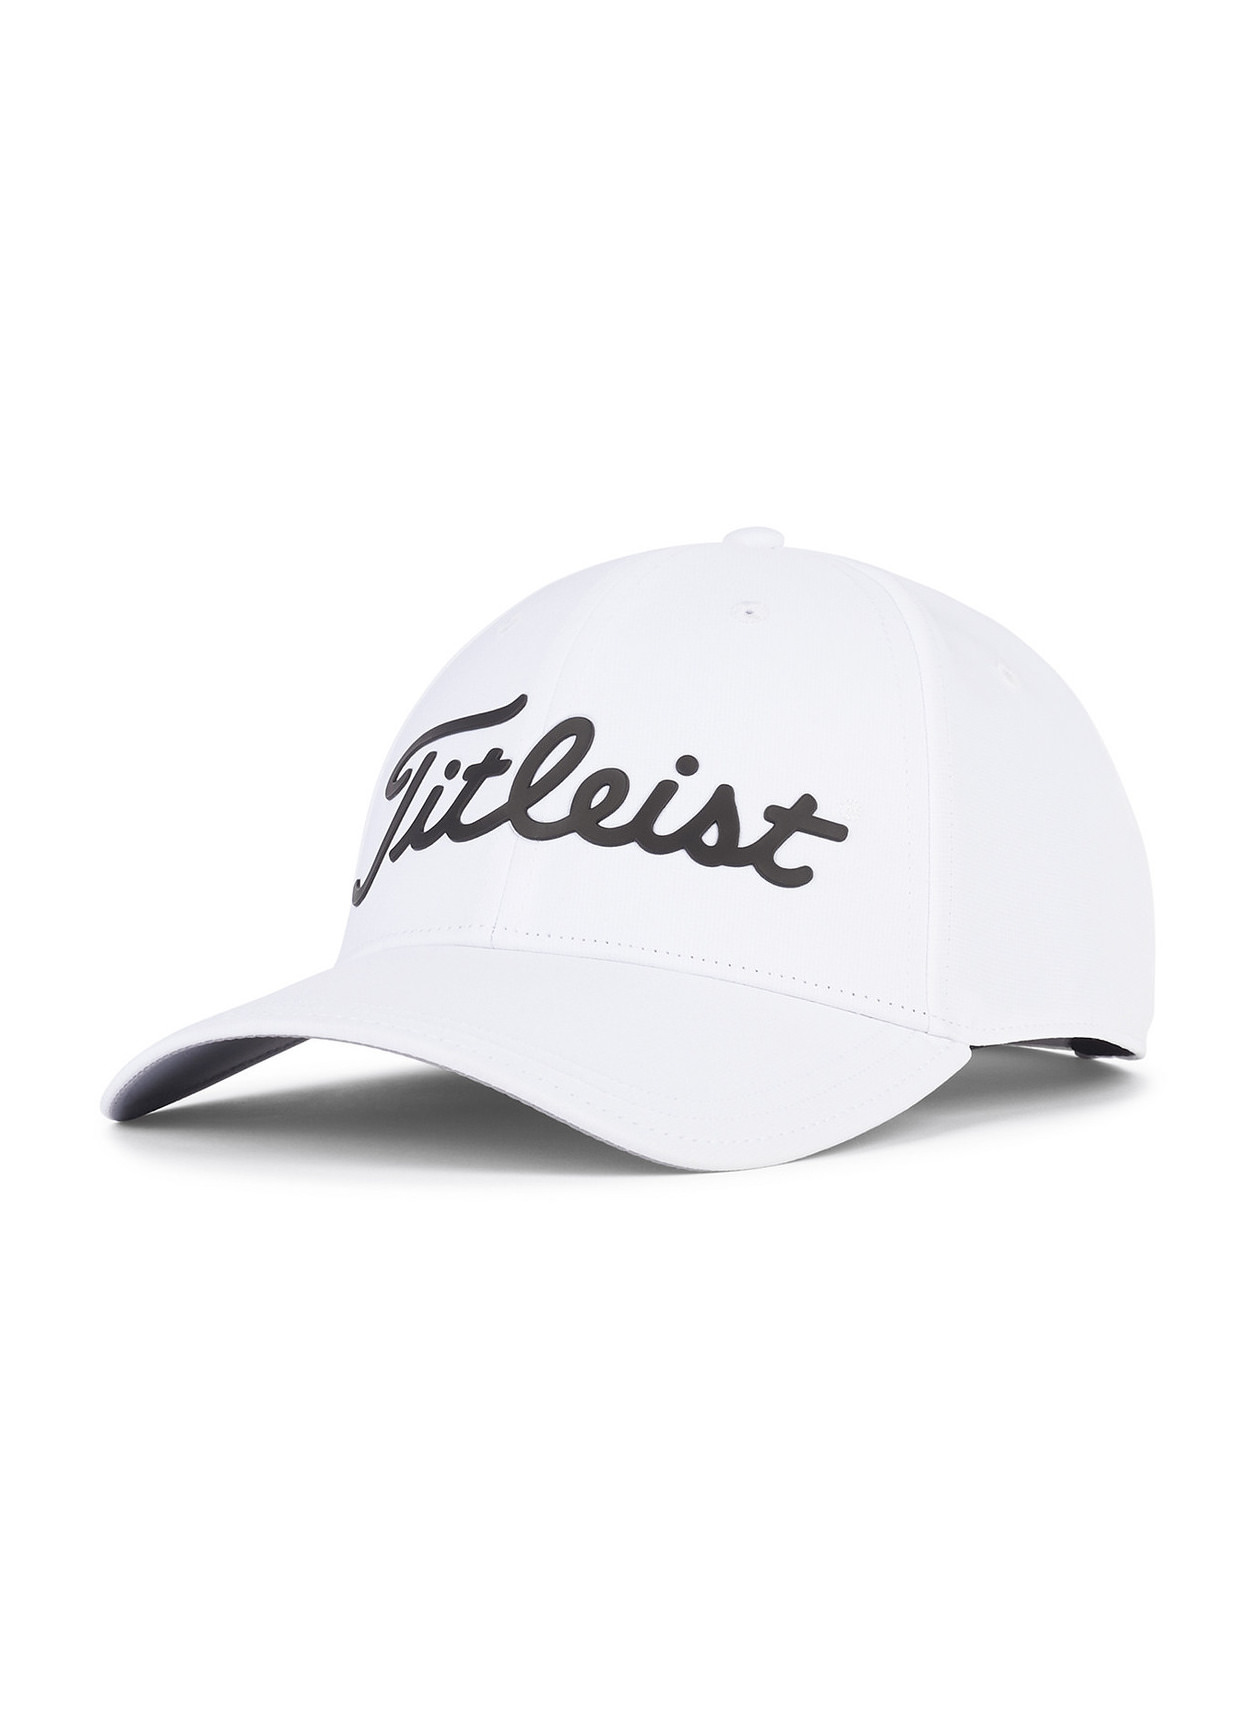 Titleist White / Black Players Performance Ball Marker Golf Hat